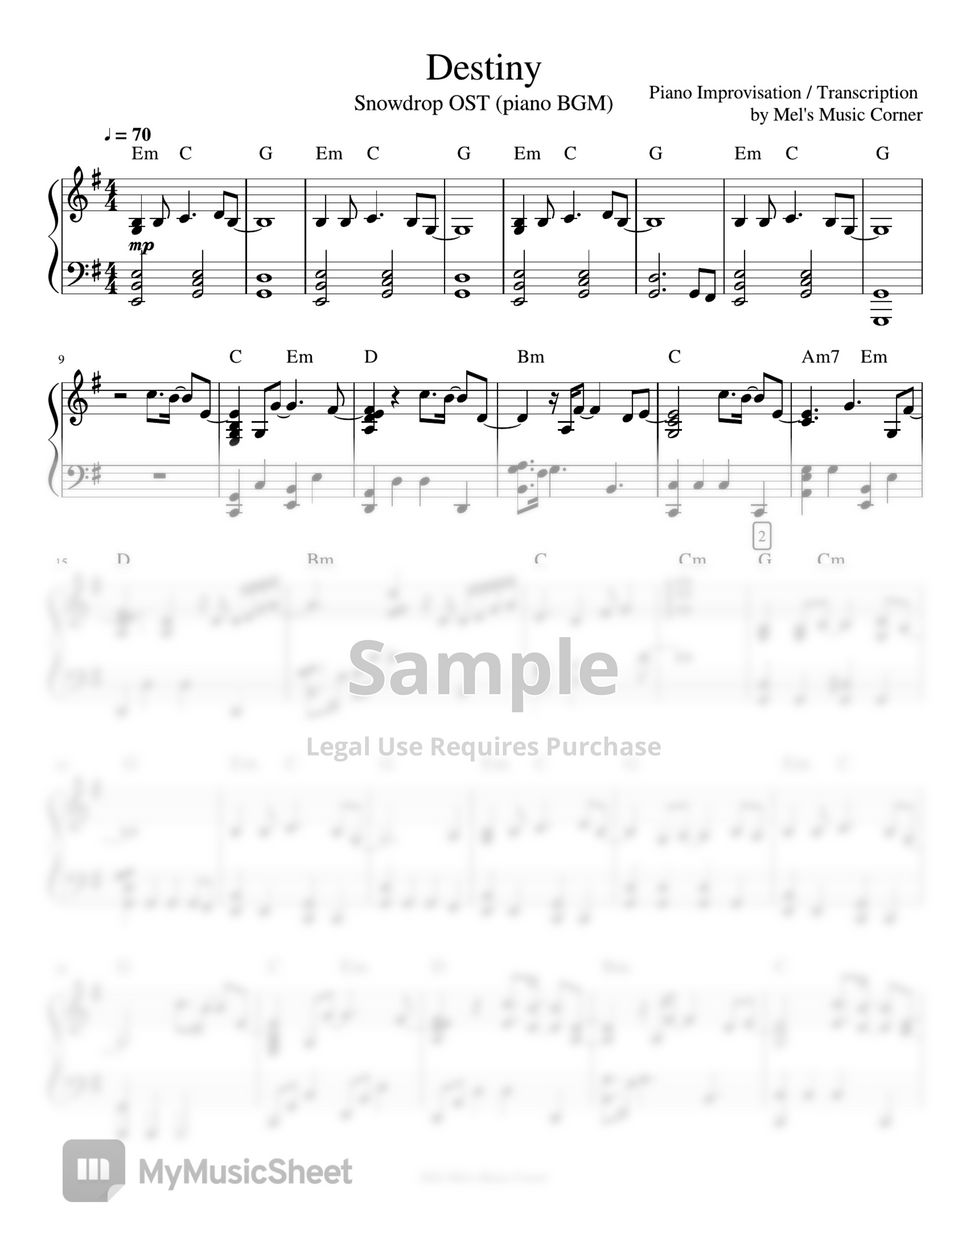 Snowdrop Ost - Destiny Snowdrop OST (piano sheet music) by Mel's Music Corner